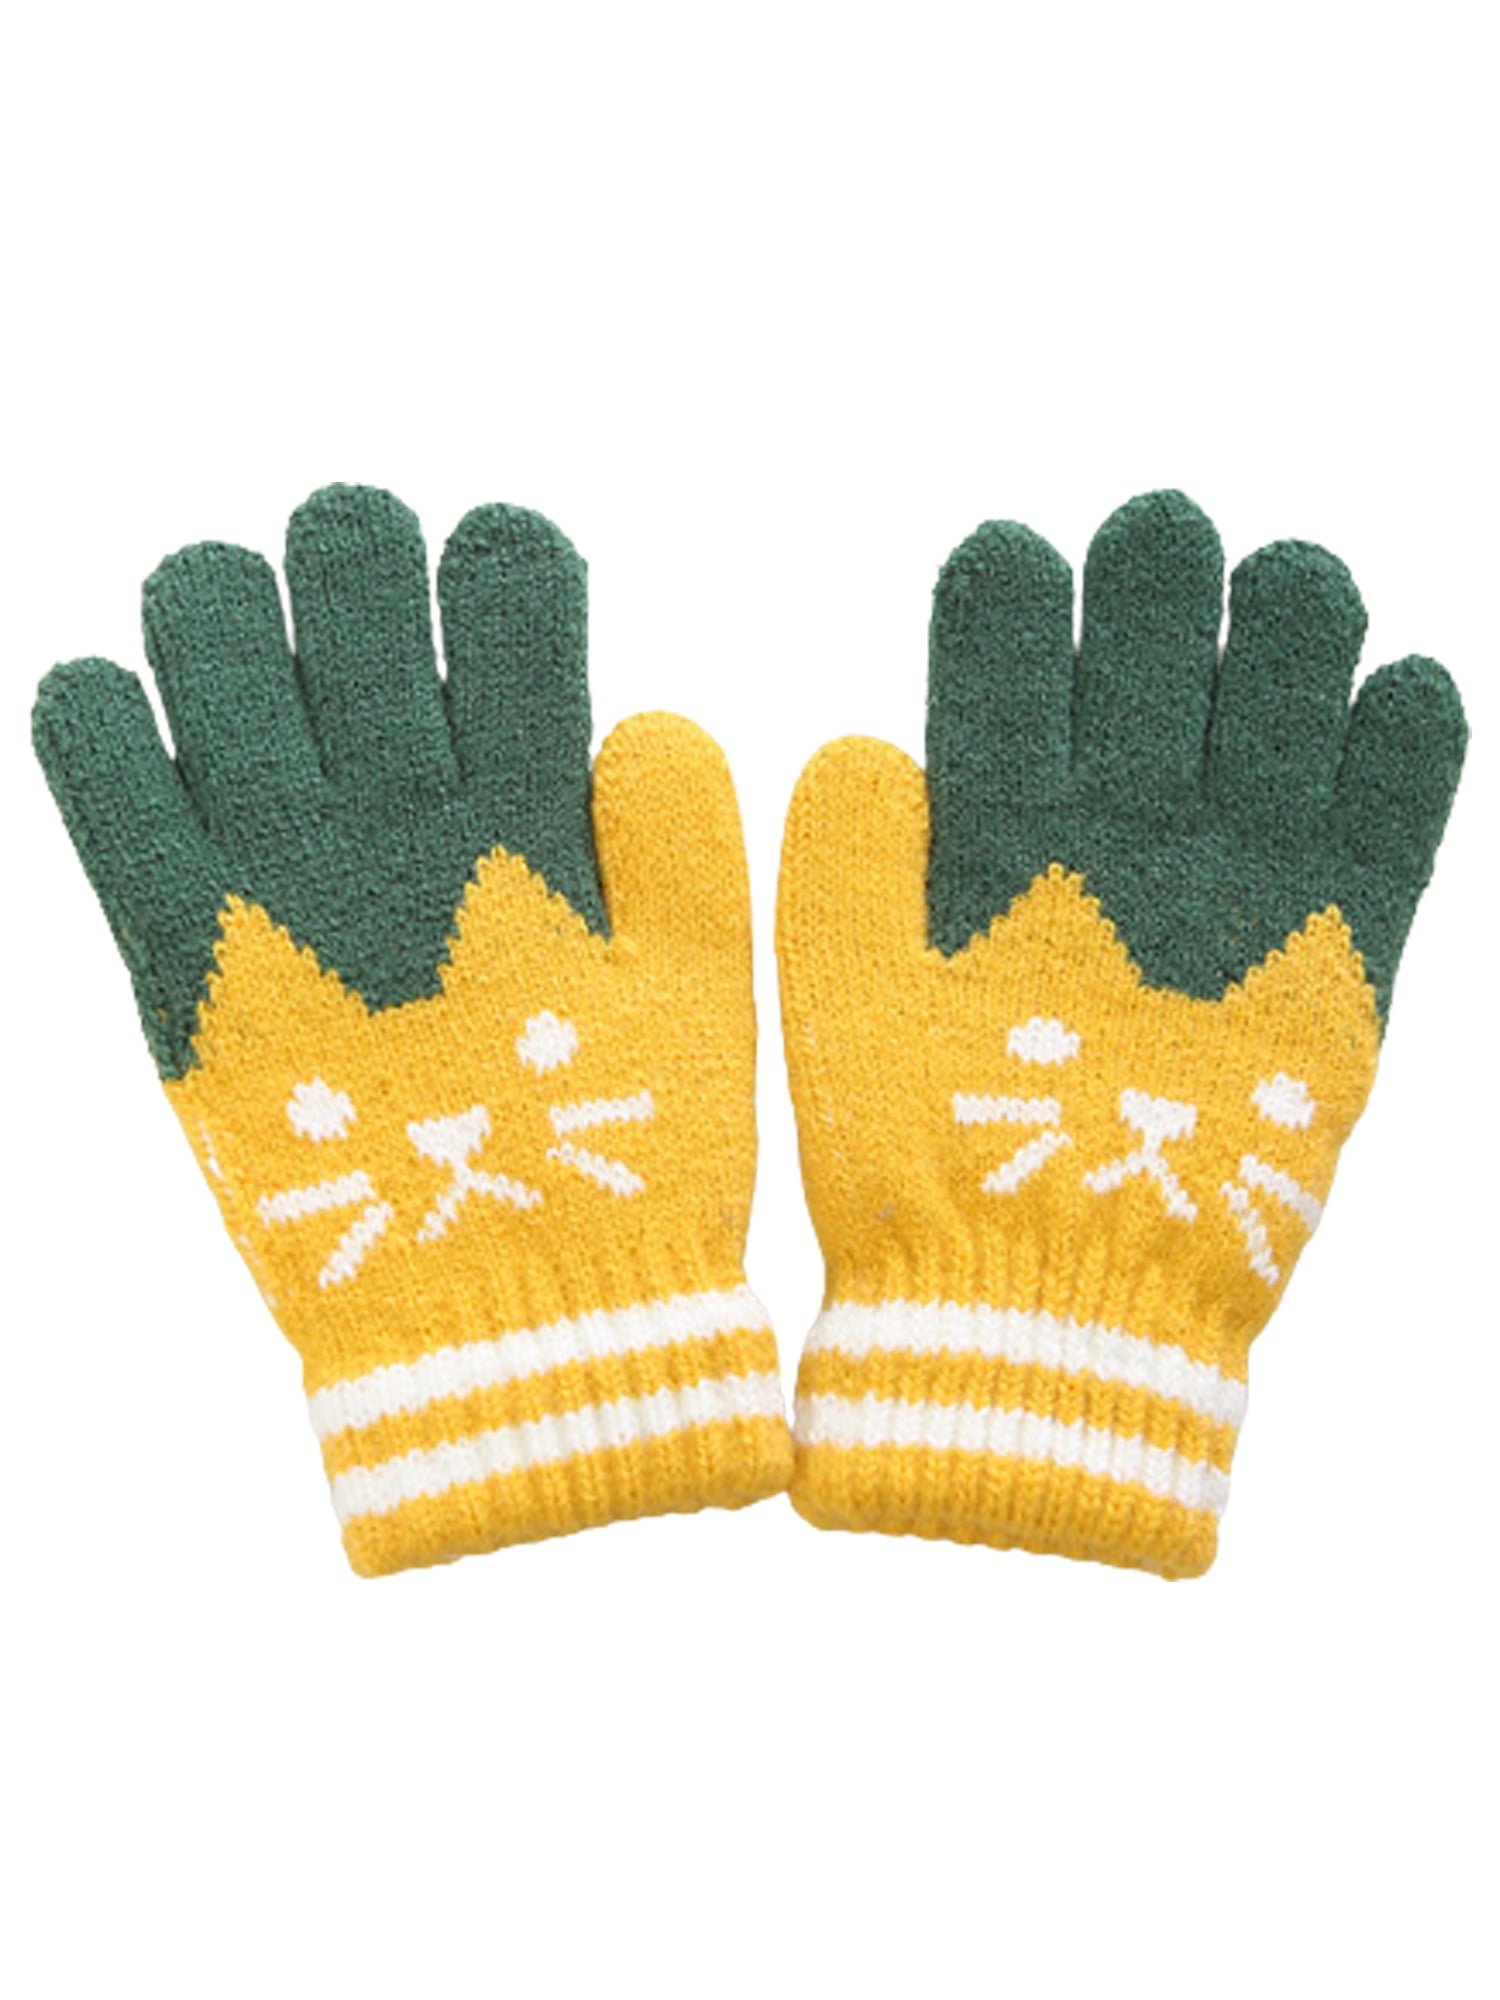 Soft Winter Gloves Toddler Boy Girl Kids Baby Cute Knitting Mittens Warm Gloves